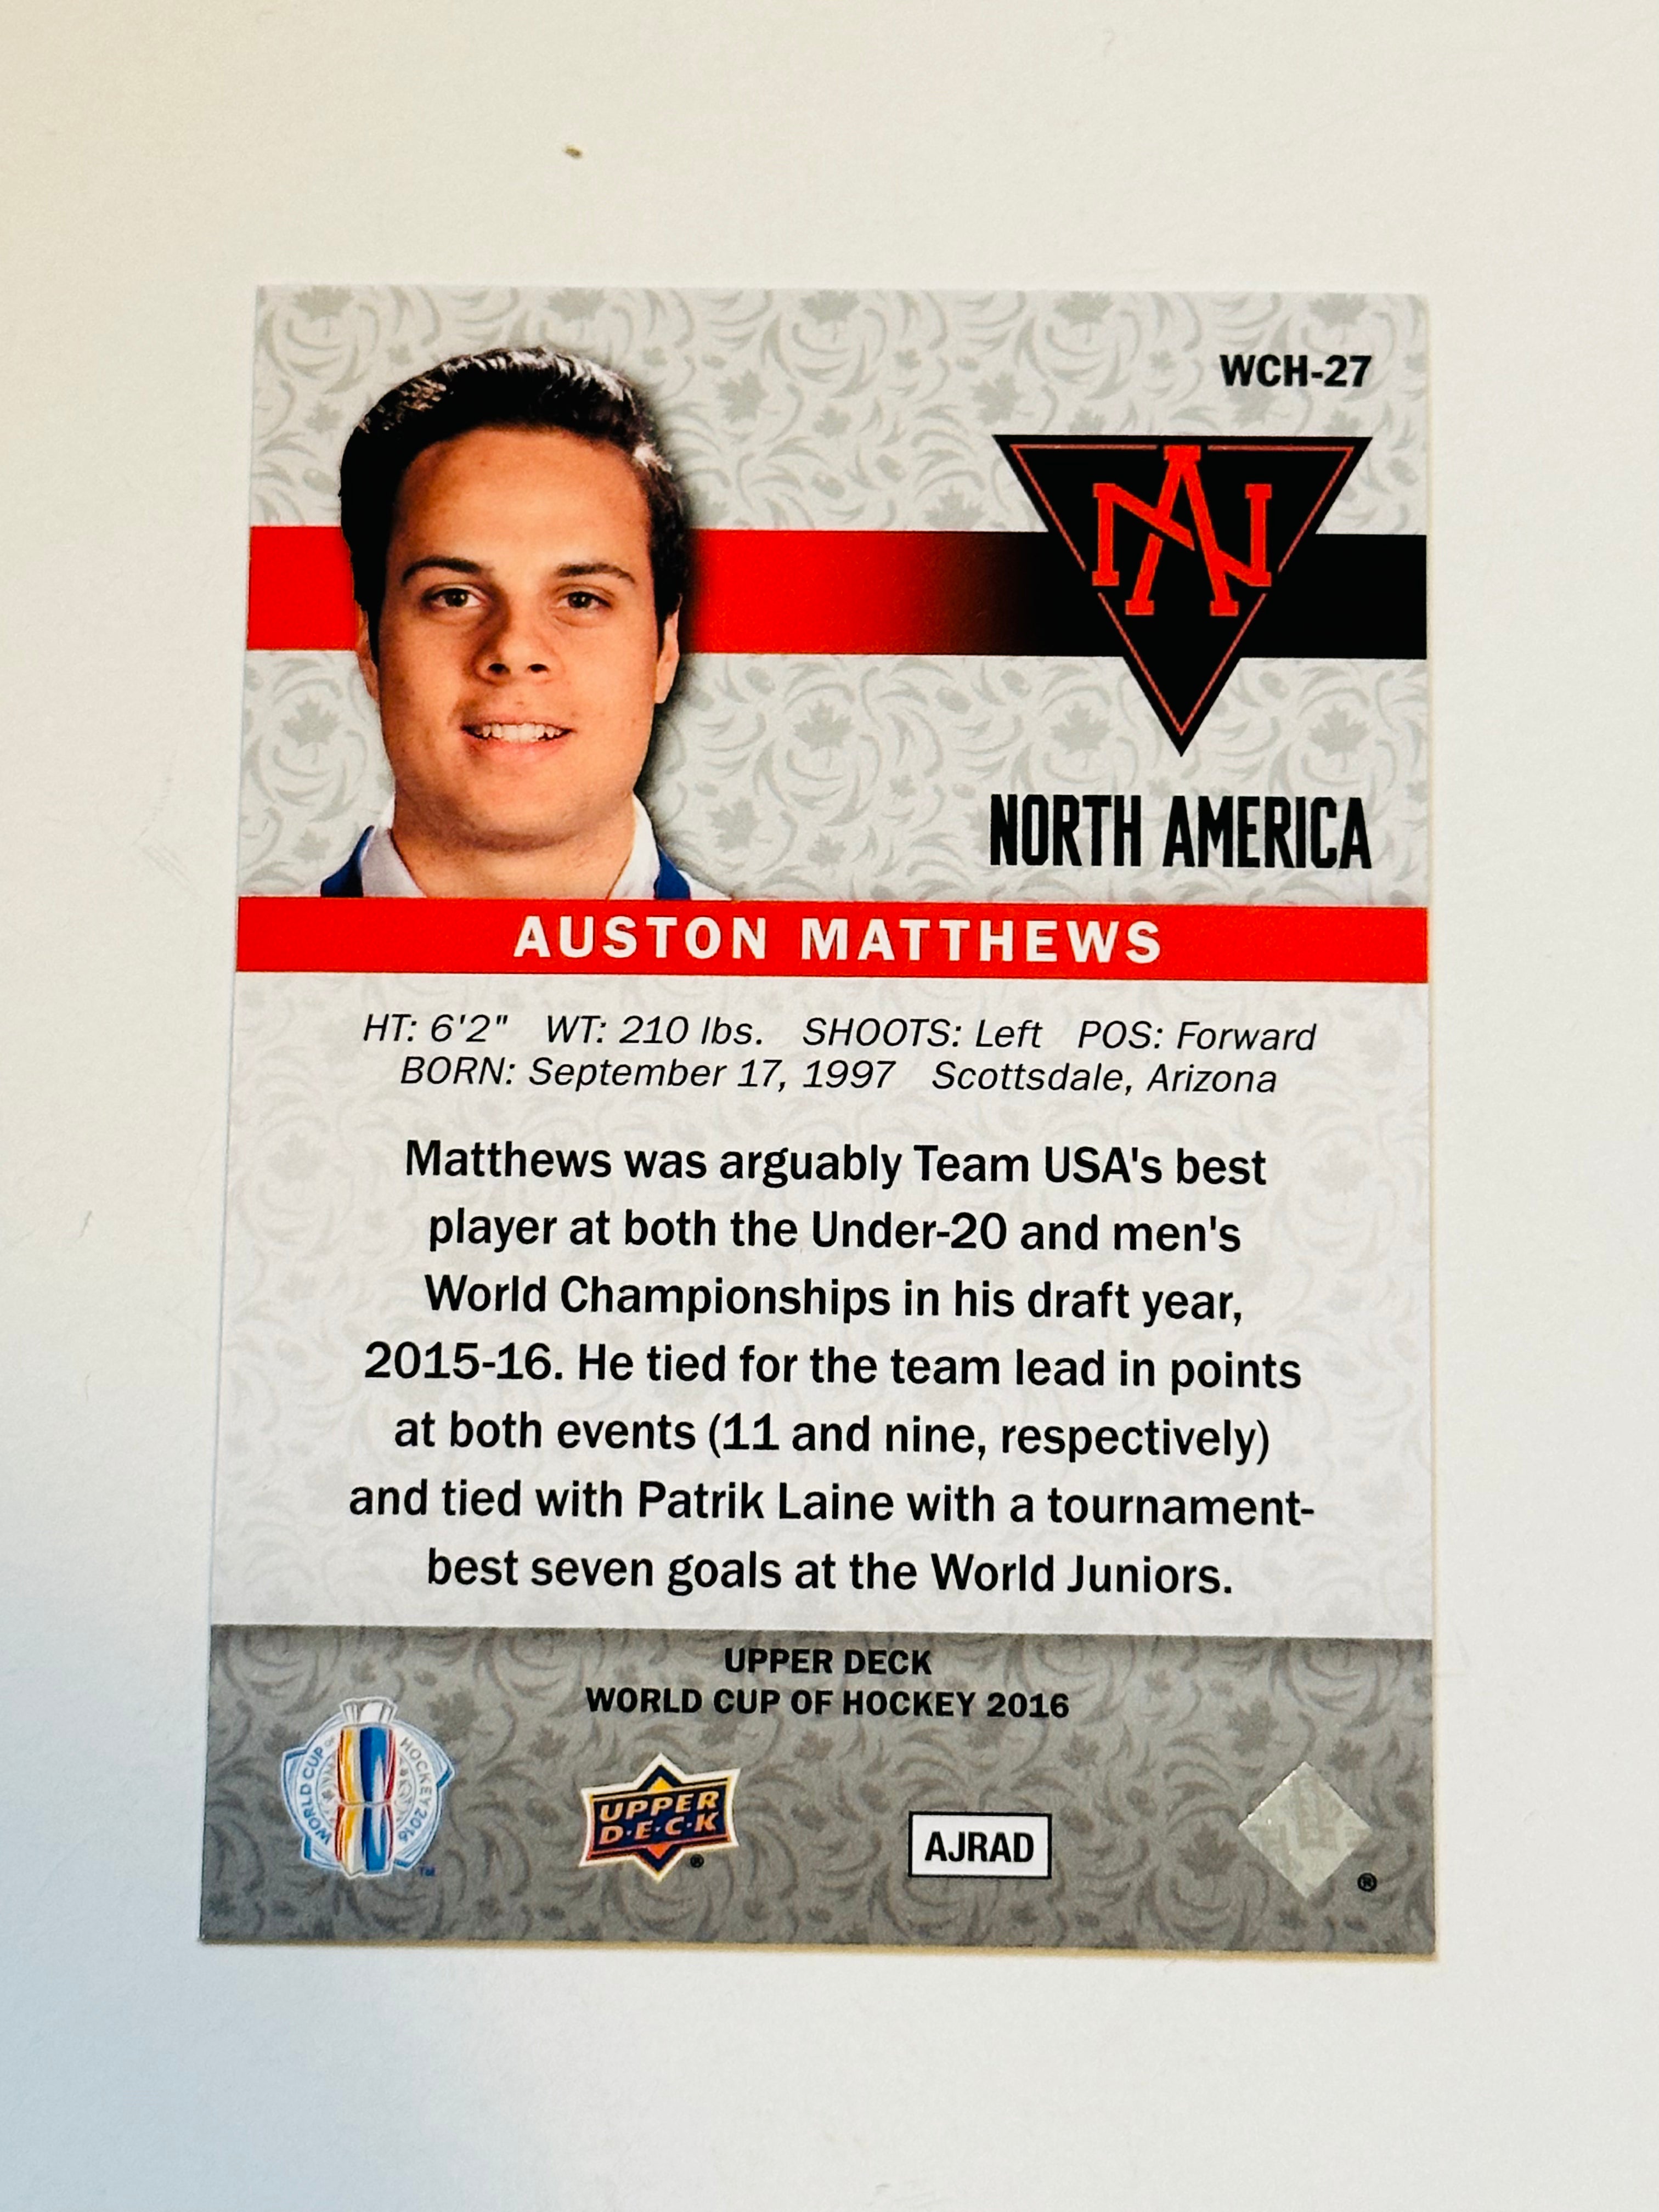 Auston Matthews North America hockey rookie card 2016